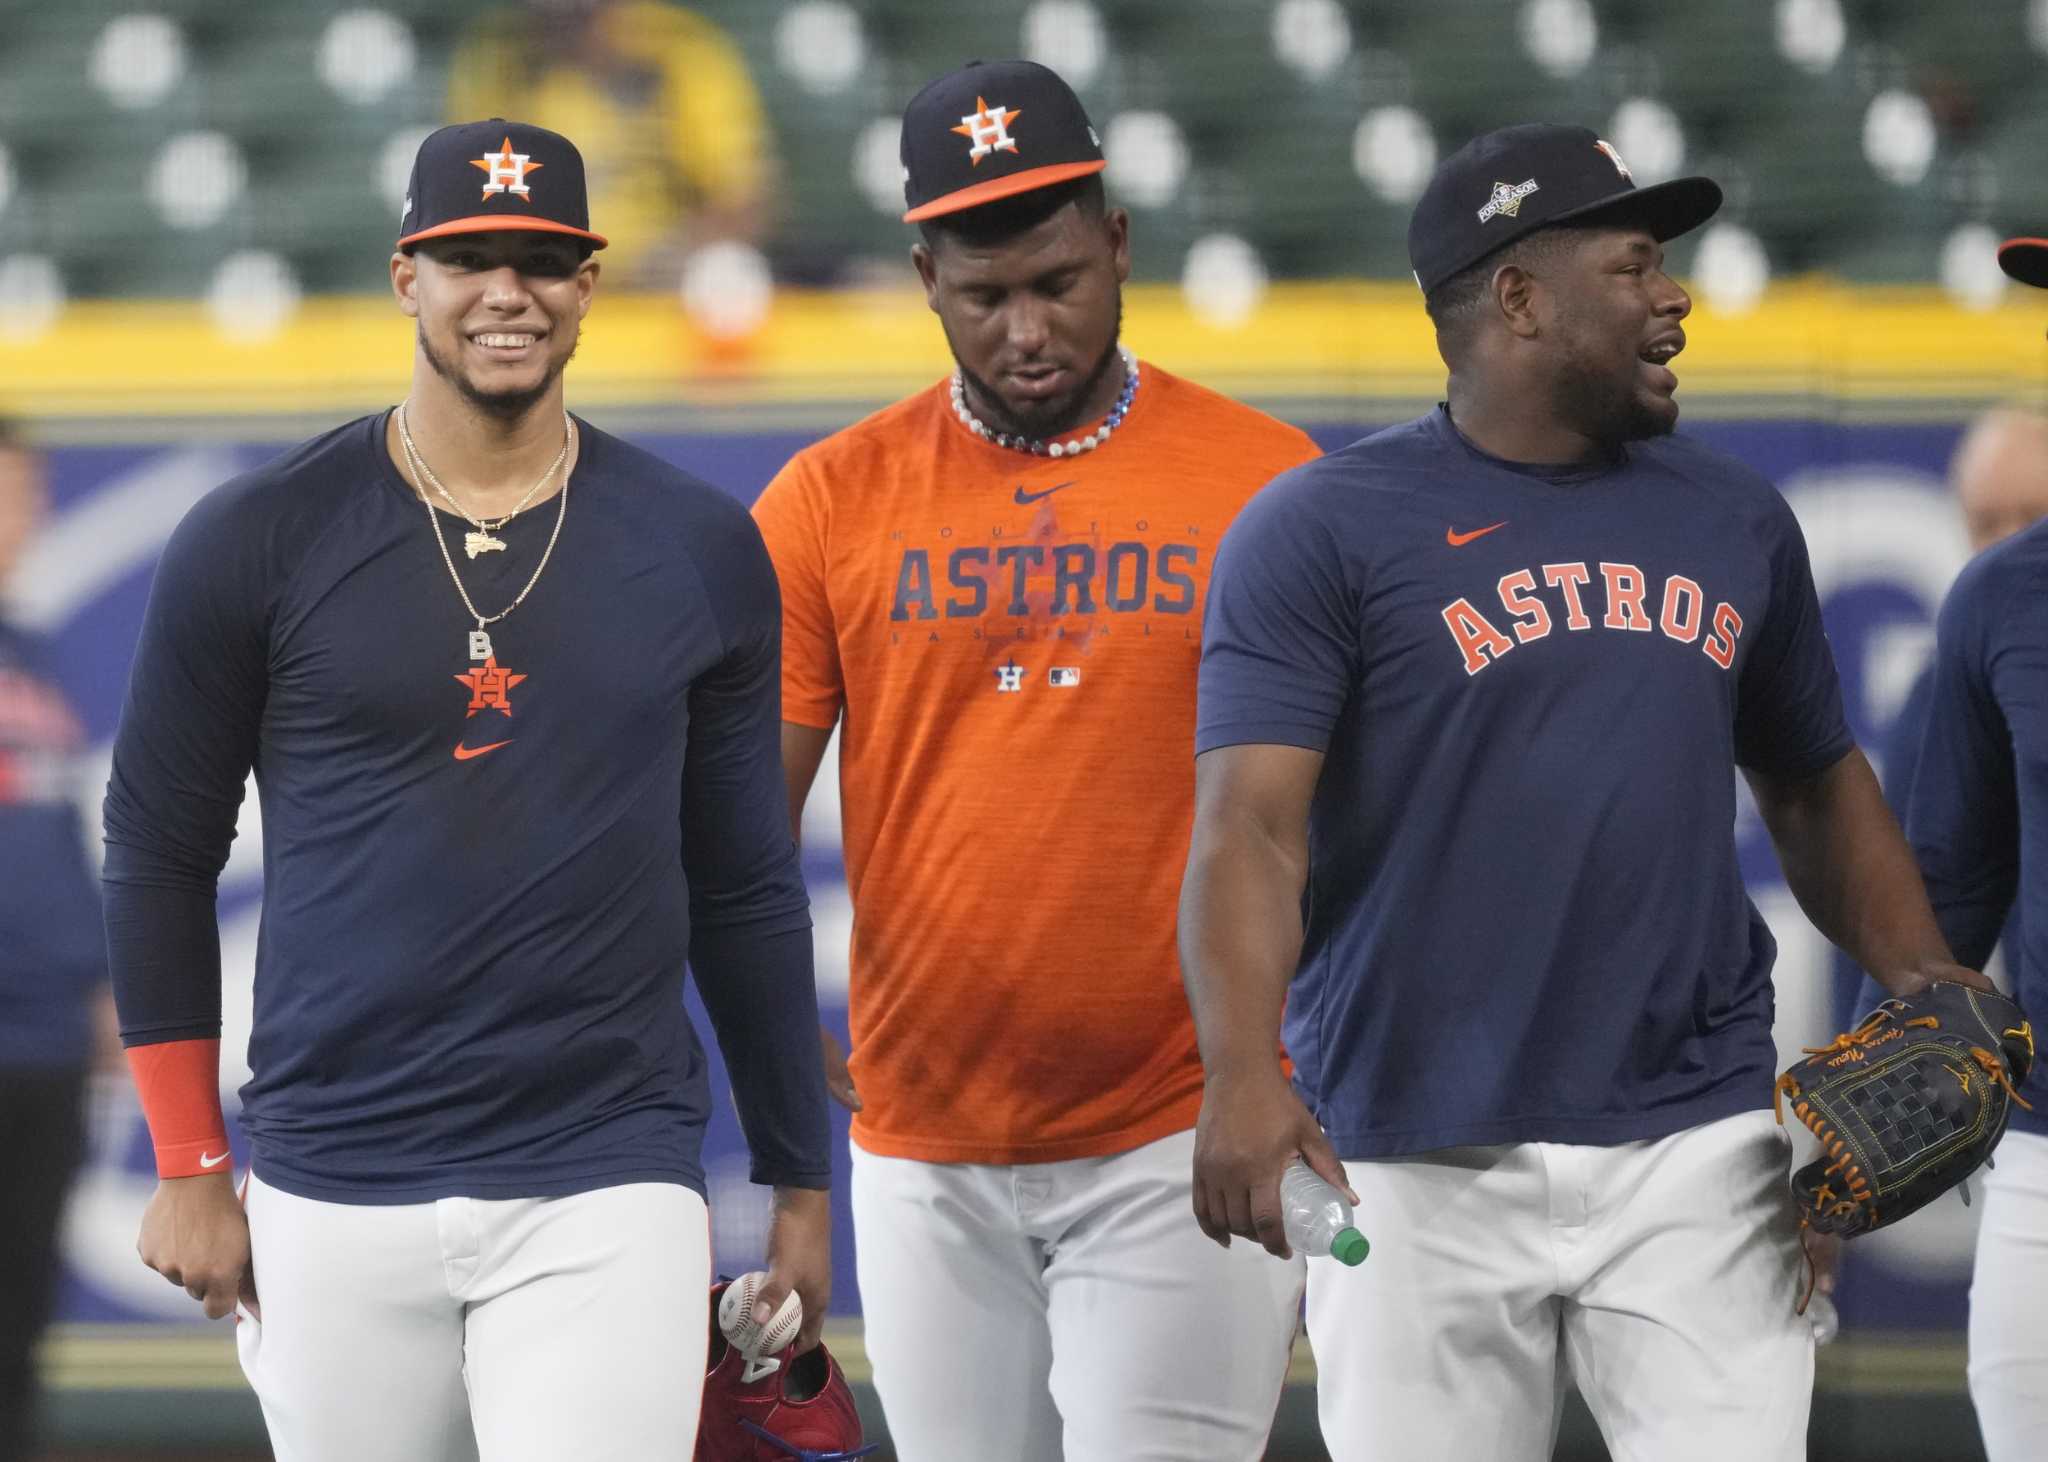 Houston Astros' Bryan Abreu suspended 2 games by MLB